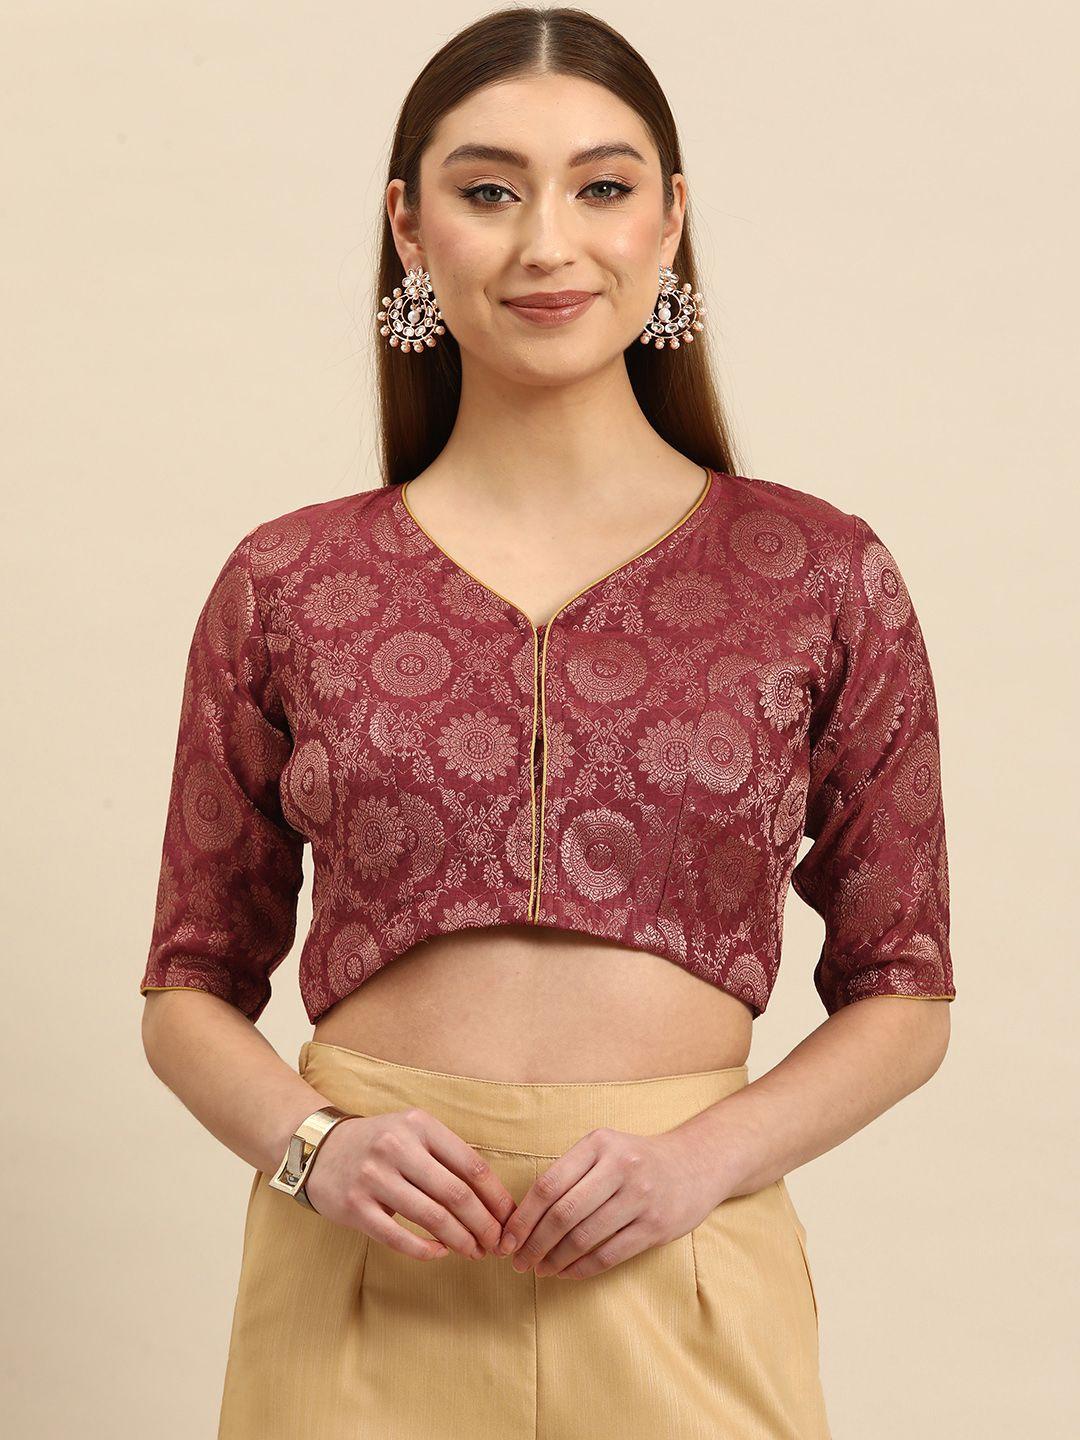 tantkatha woven design saree blouse